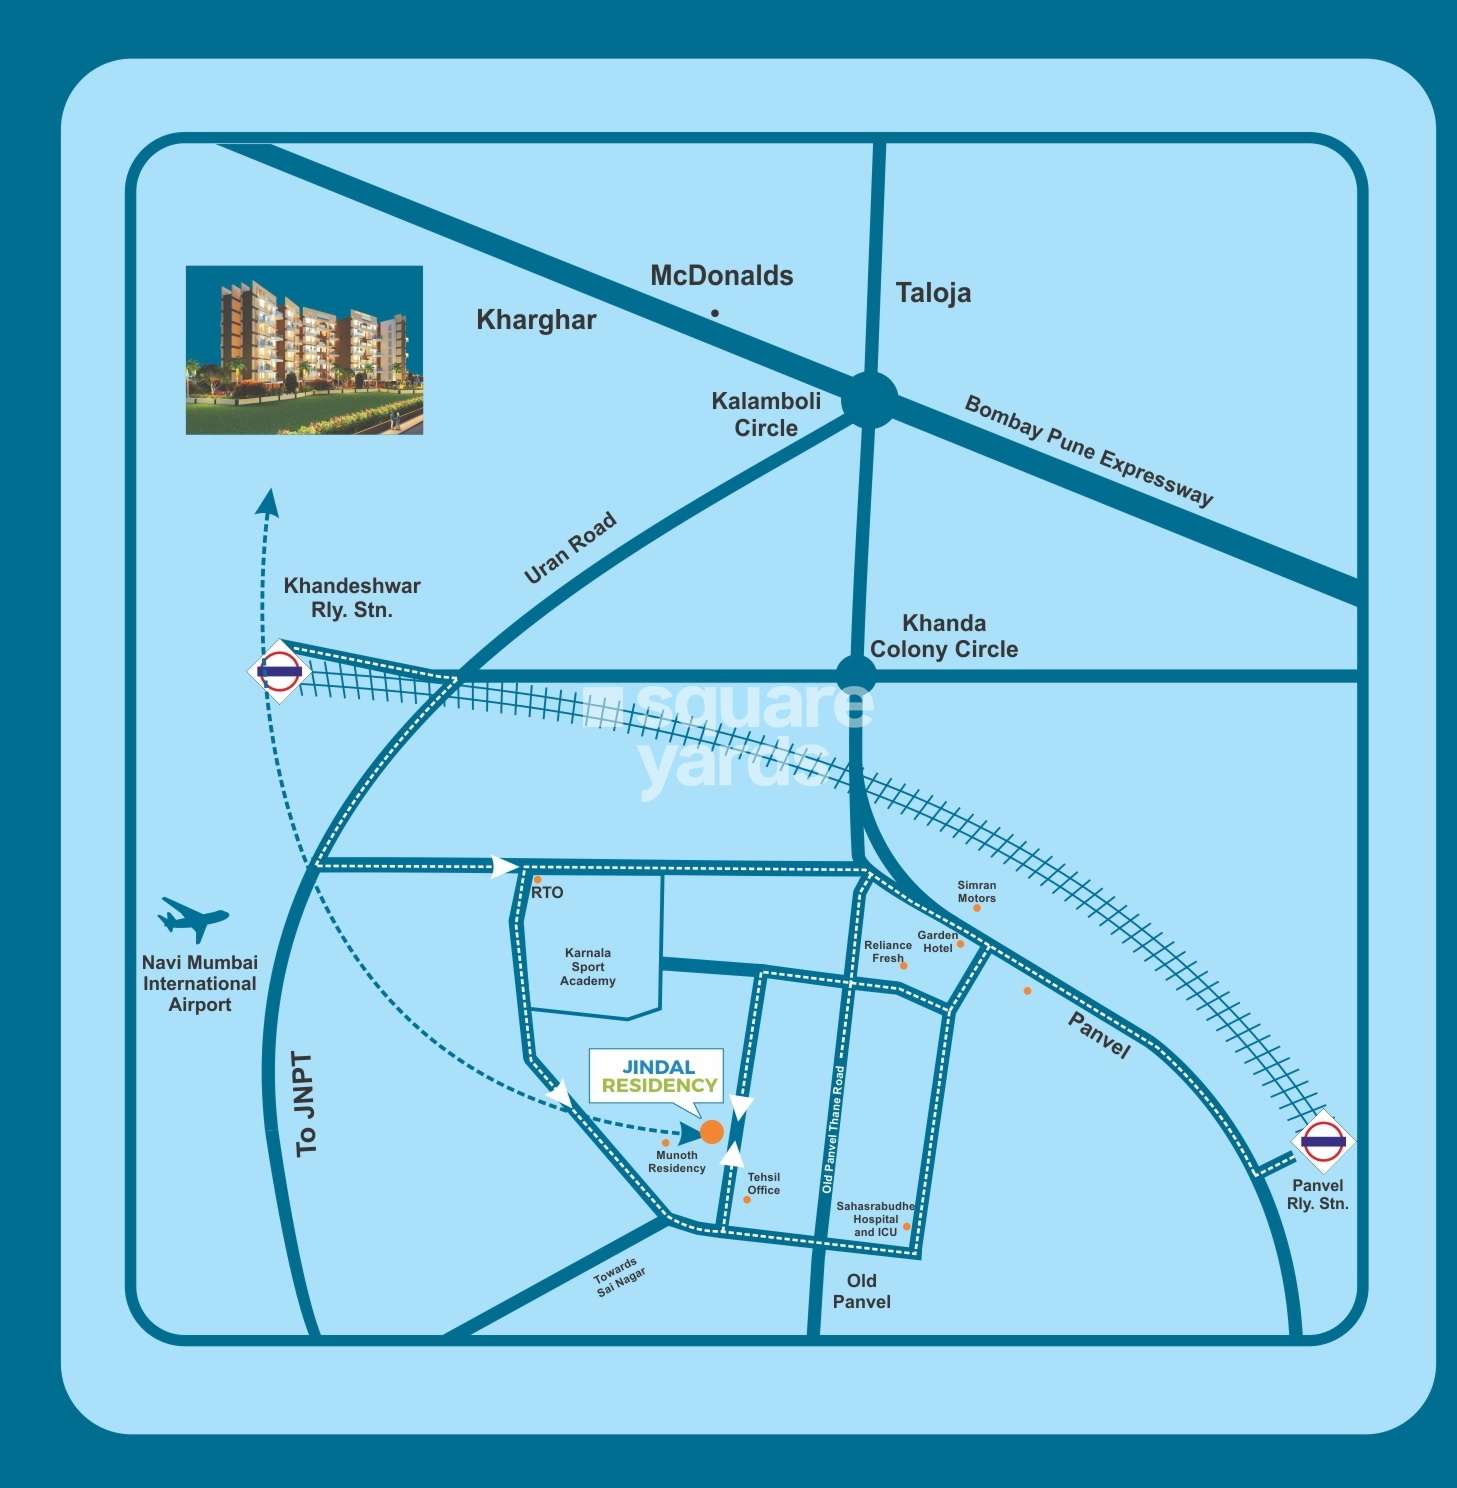 jindal residency location image1